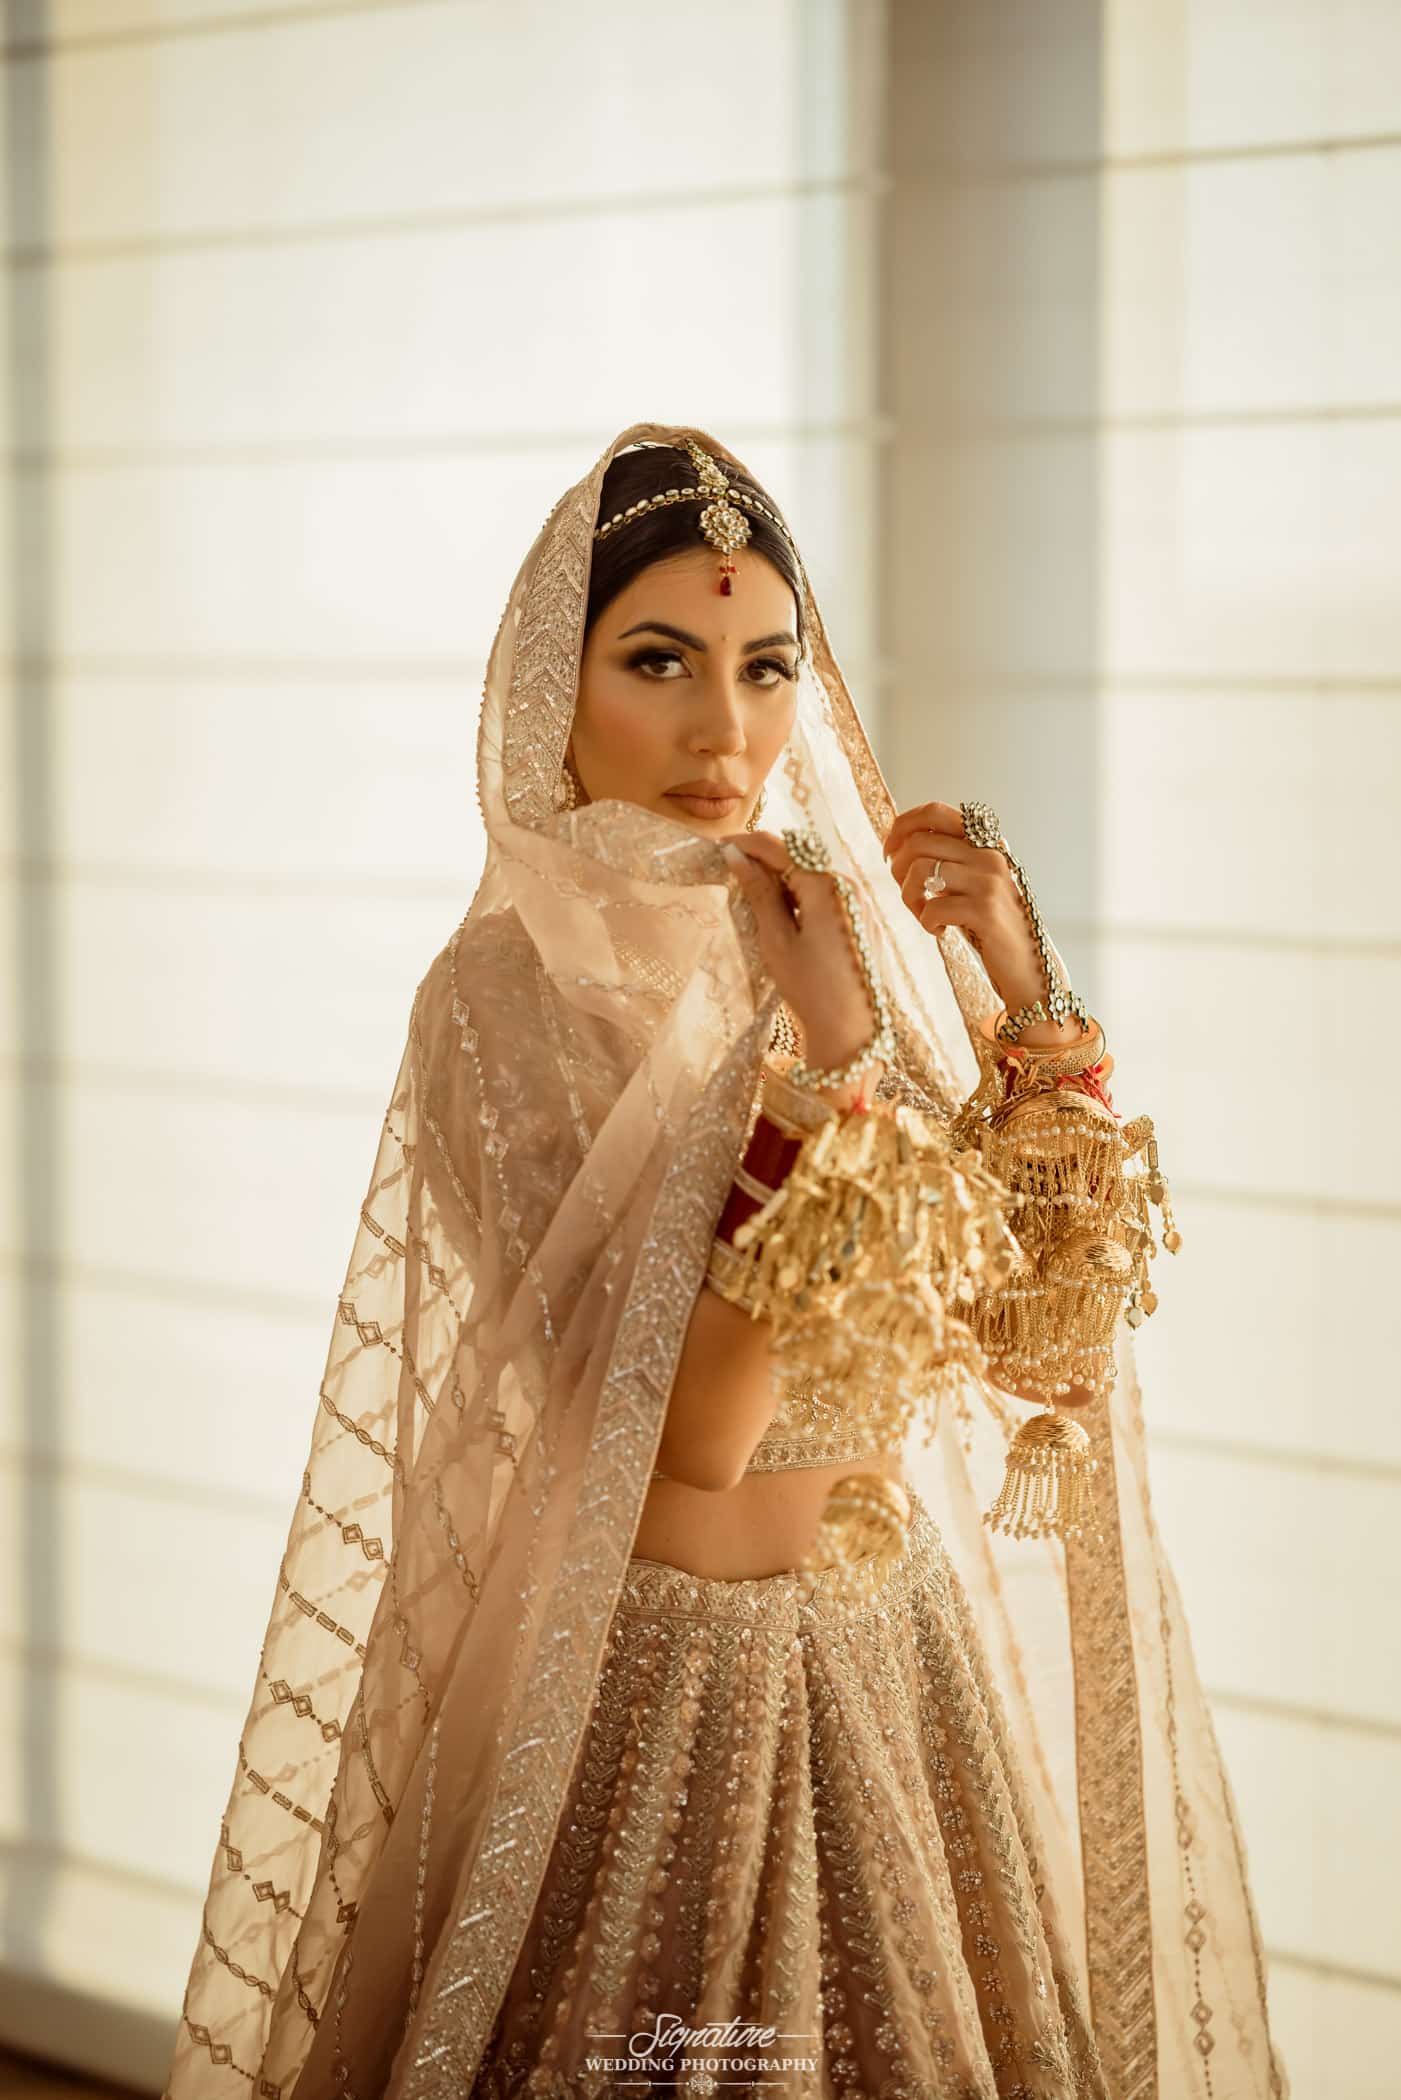 Indian bride looking at camera holding veil